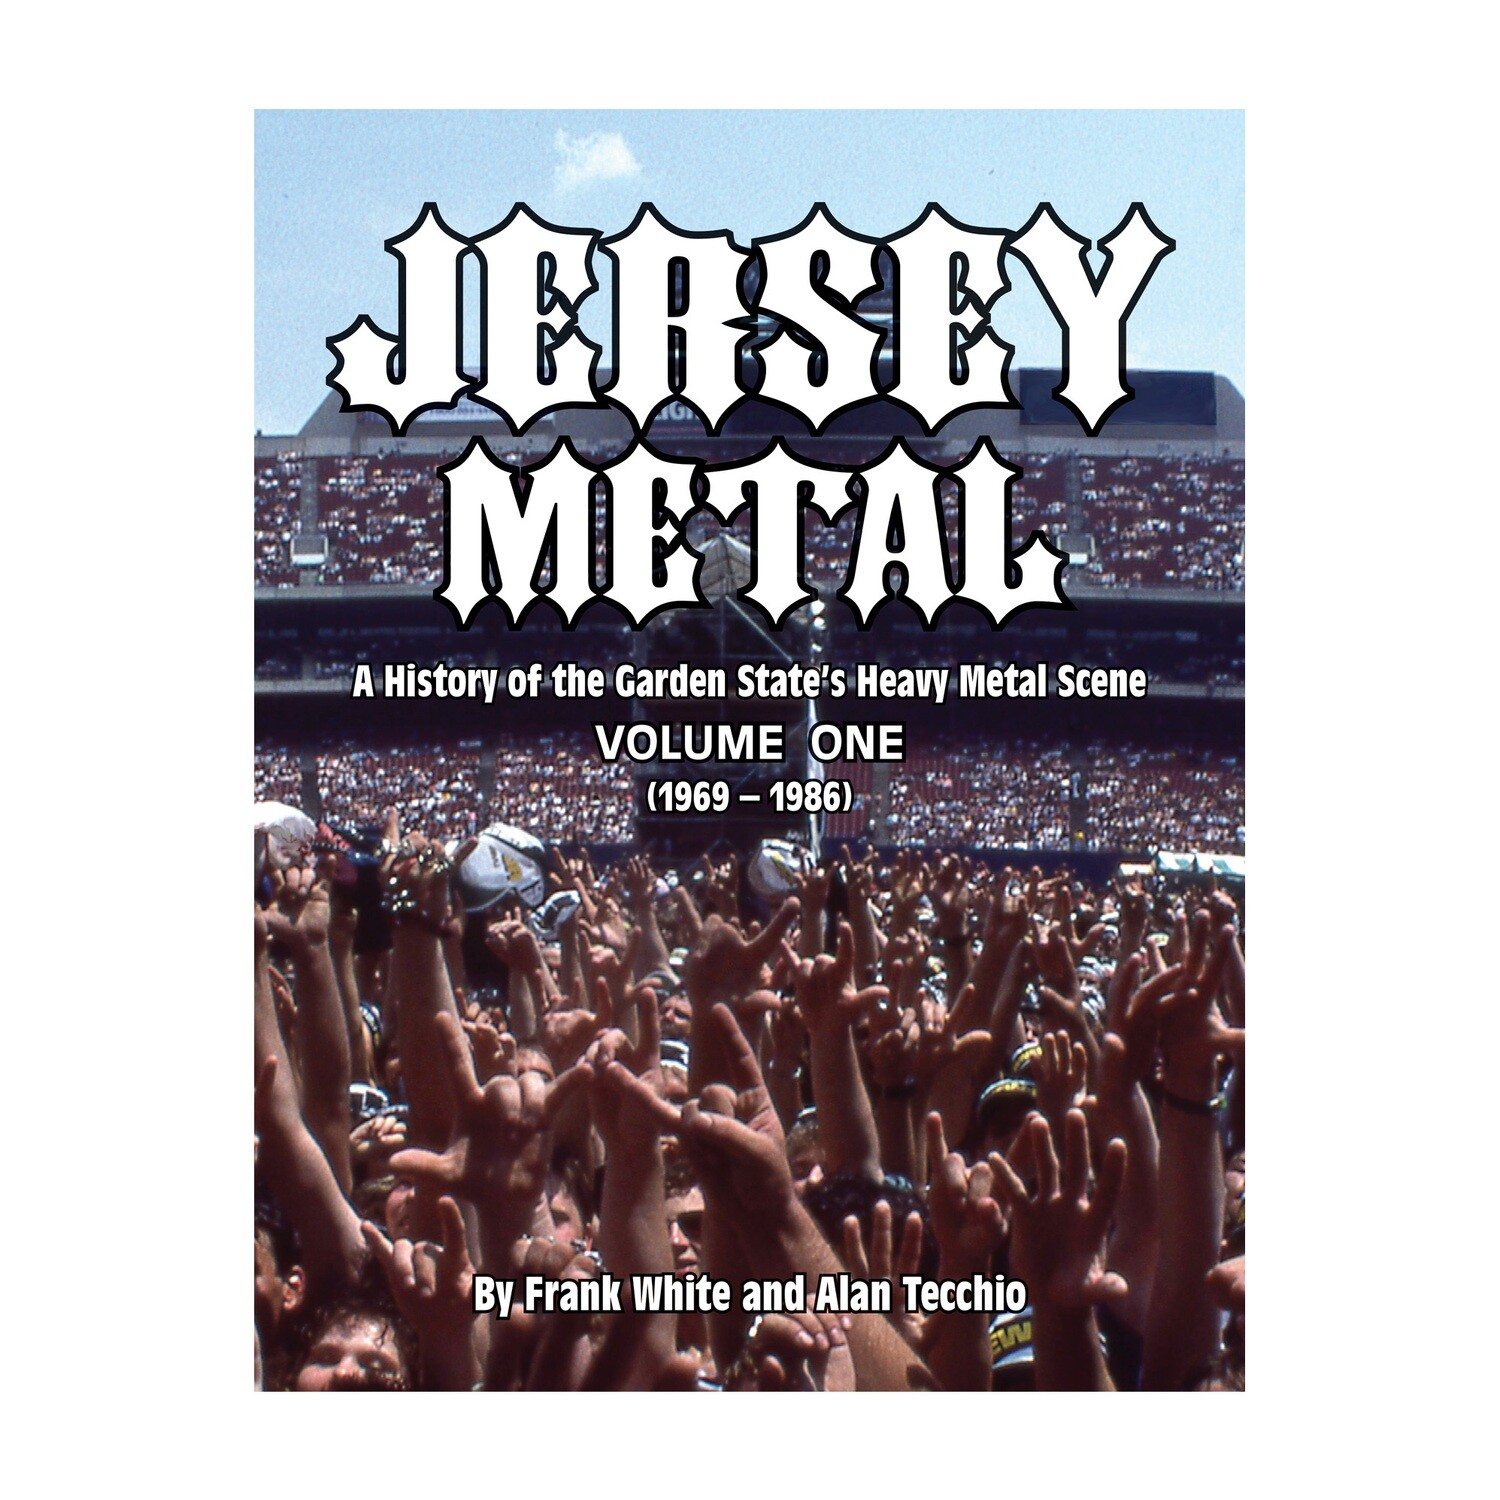 Jersey Metal Book